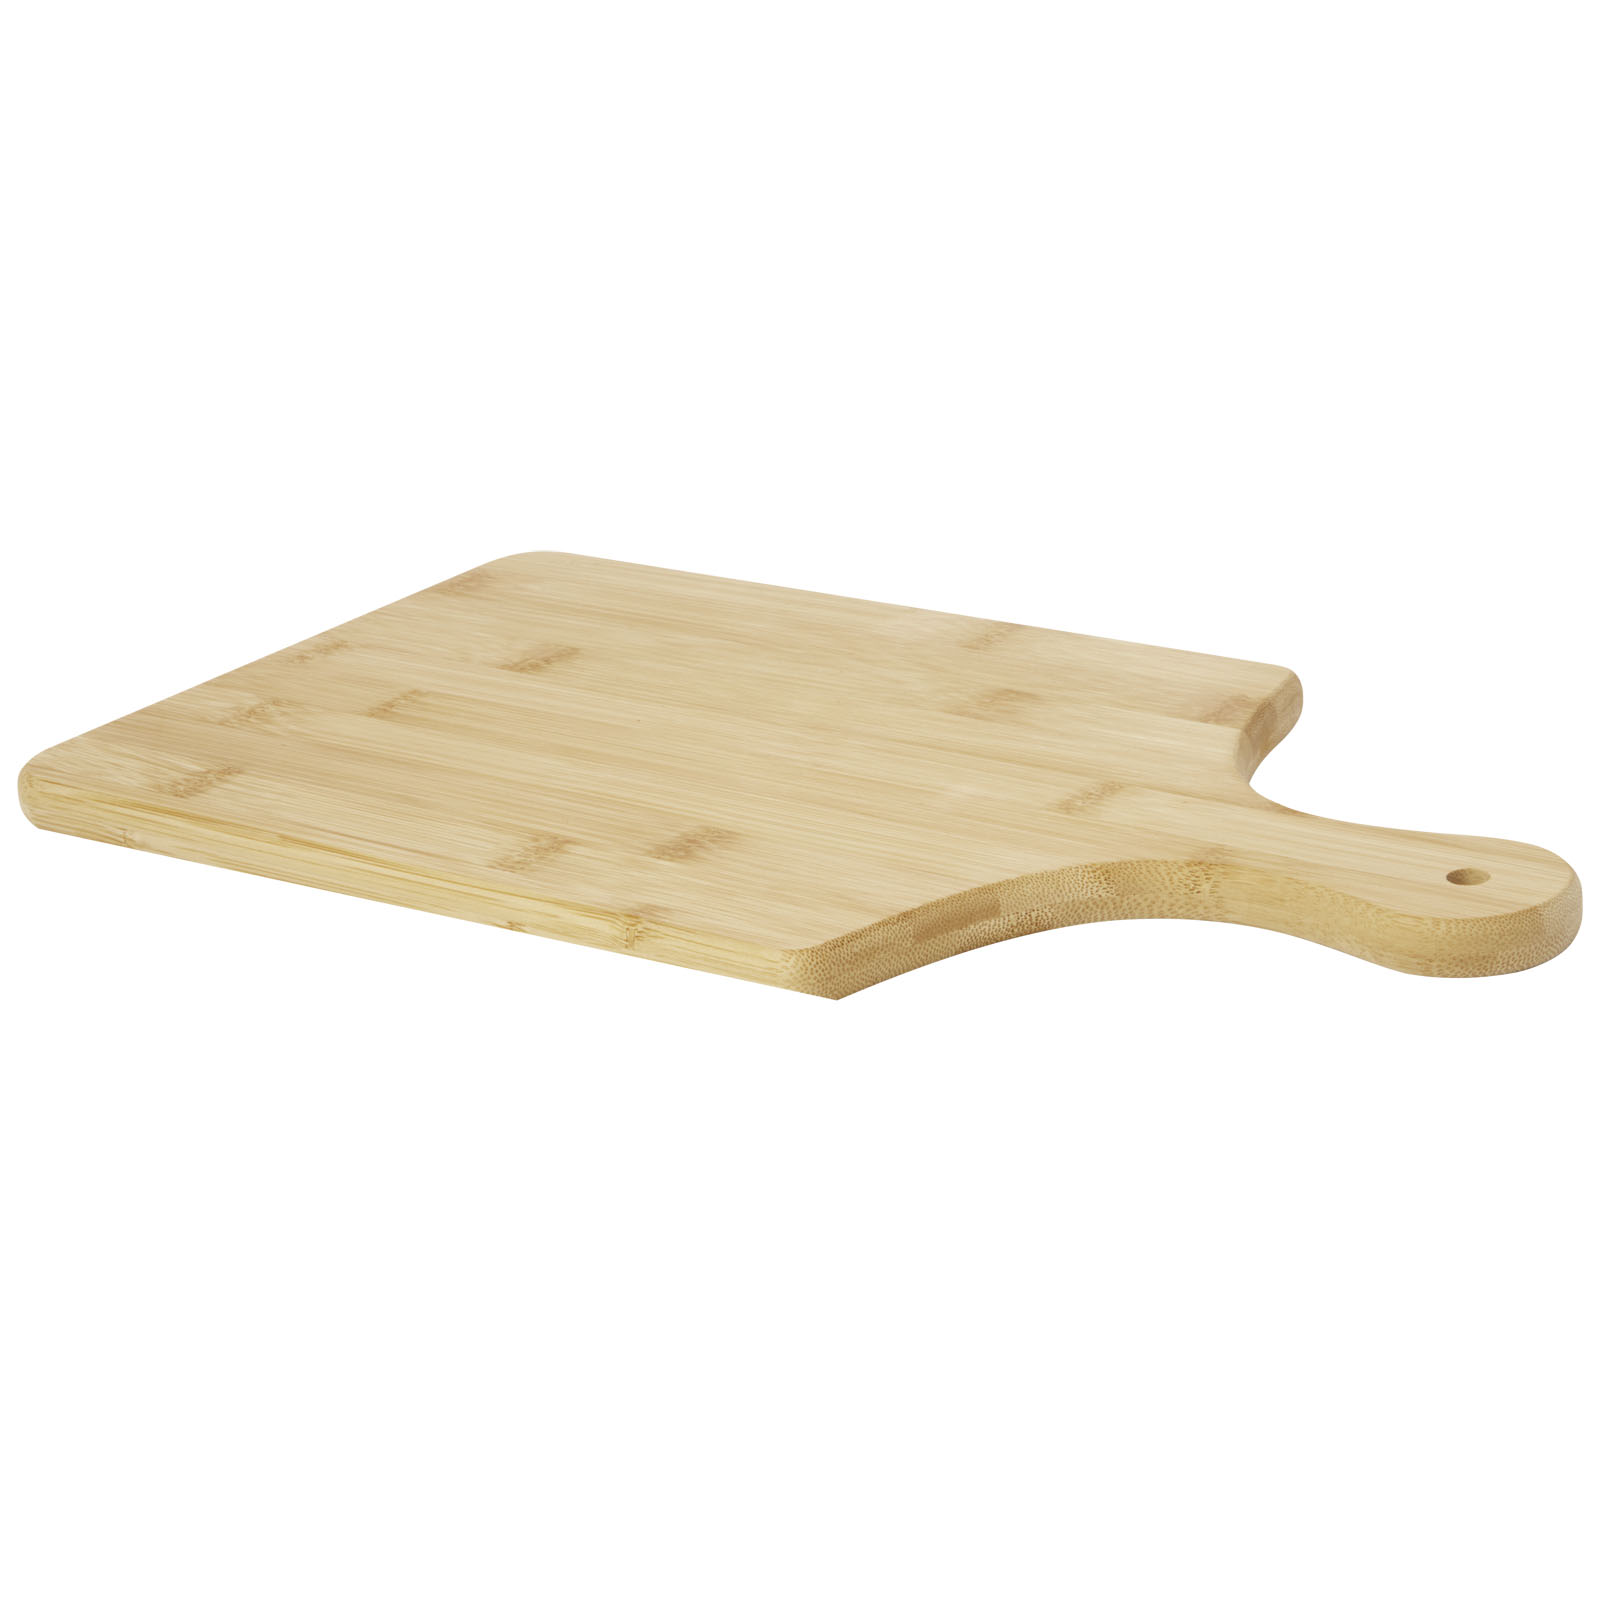 Advertising Cutting Boards - Baron bamboo cutting board - 3